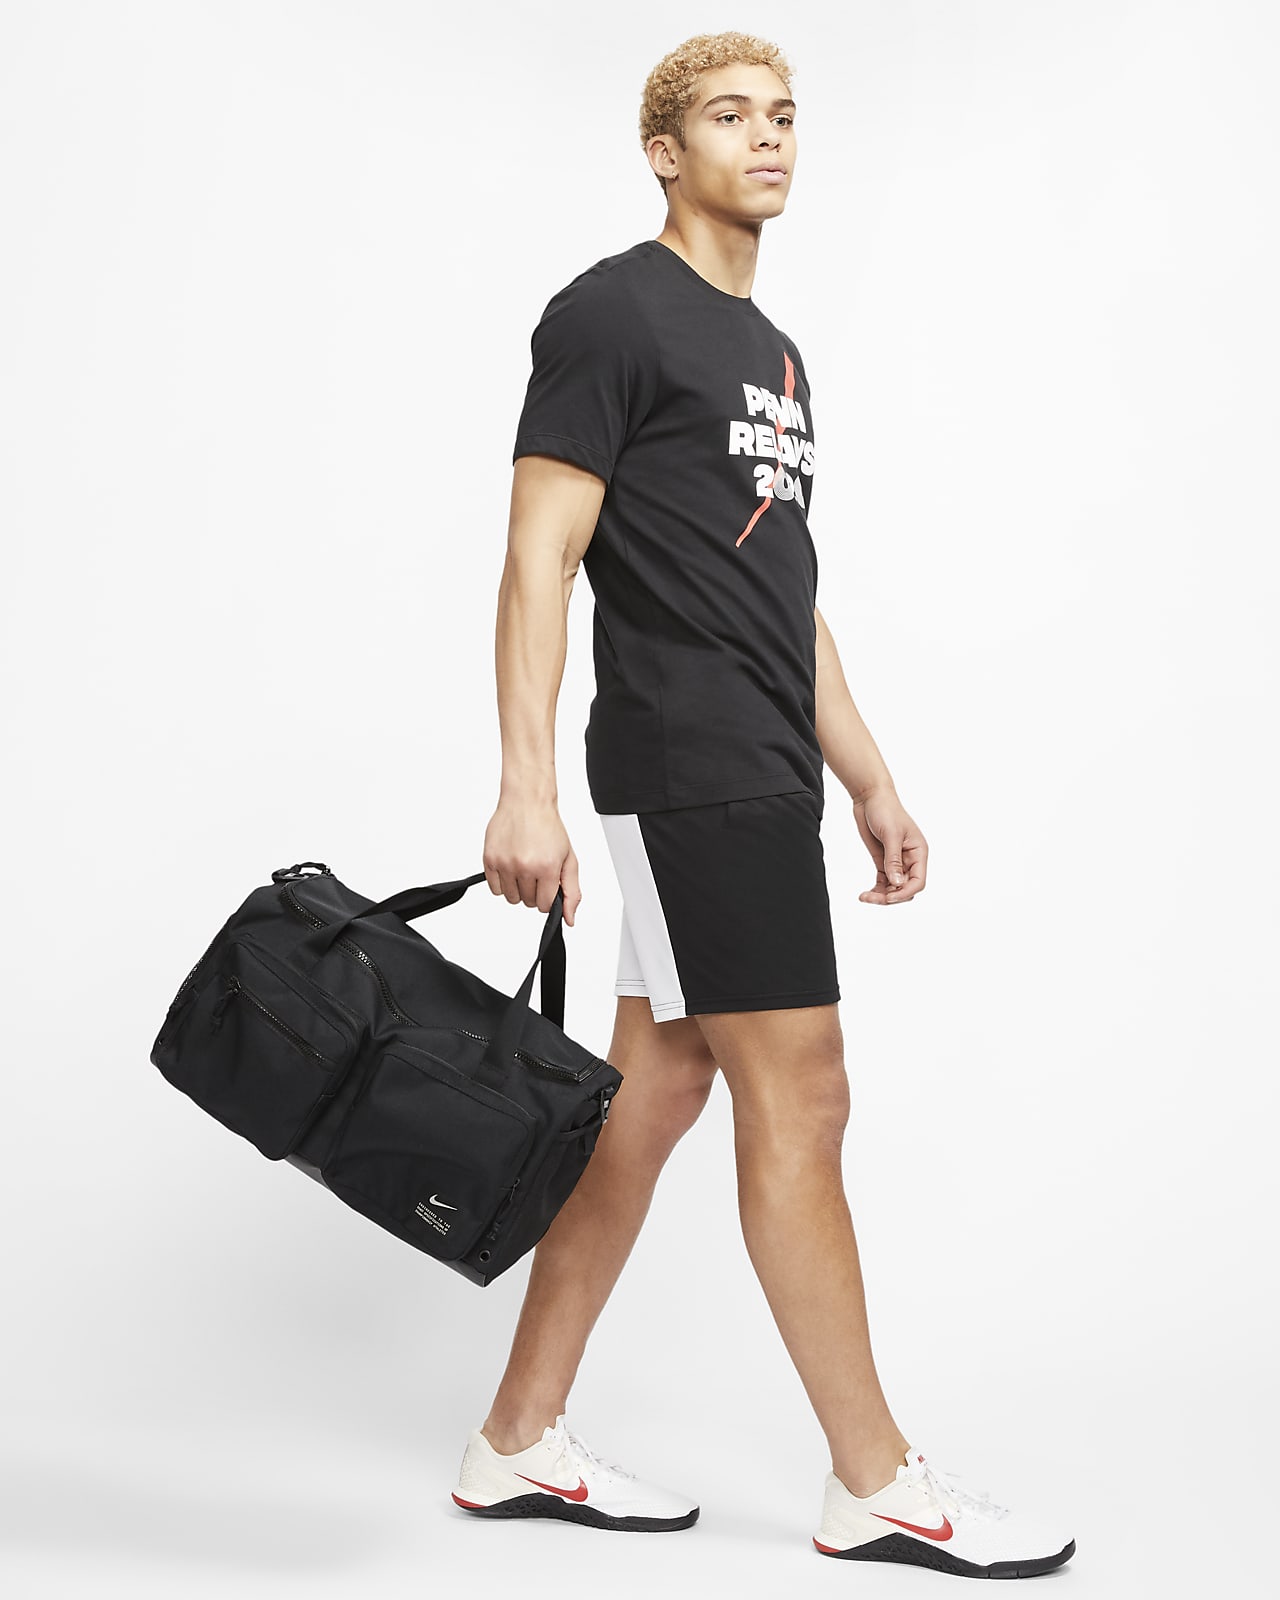 Take a closer look at the Nike One Duffel Bag - YouTube